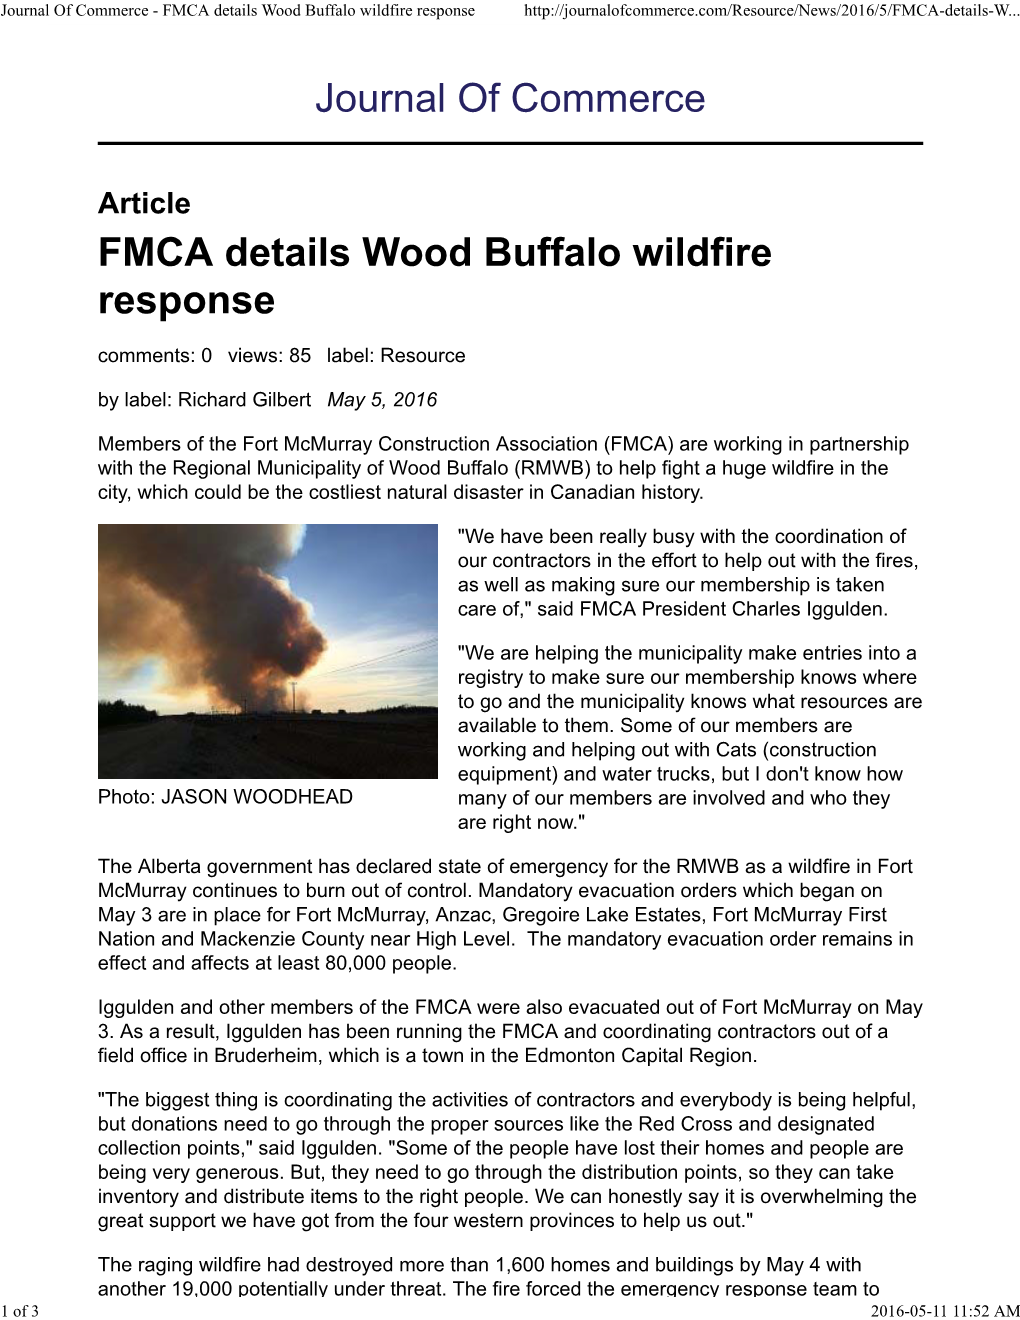 FMCA Details Wood Buffalo Wildfire Response